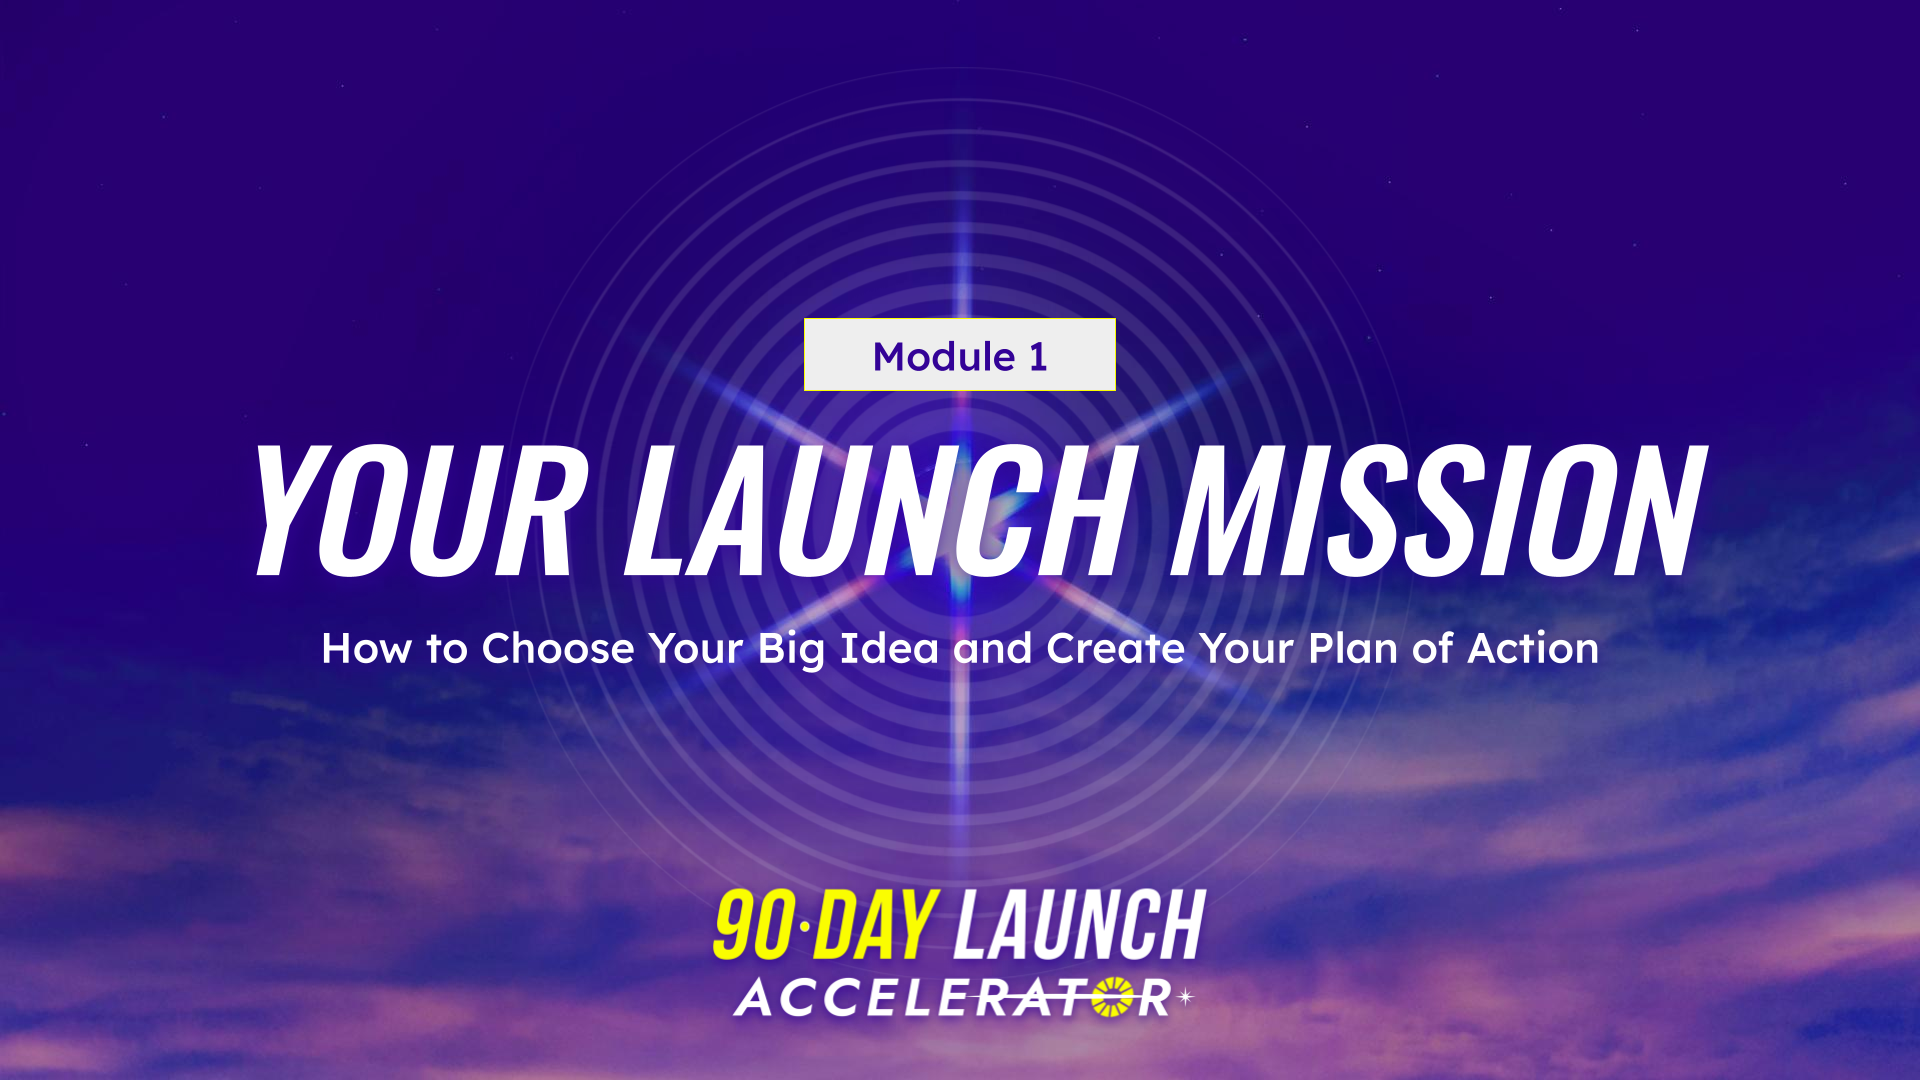 Module 1 Your Launch Mission